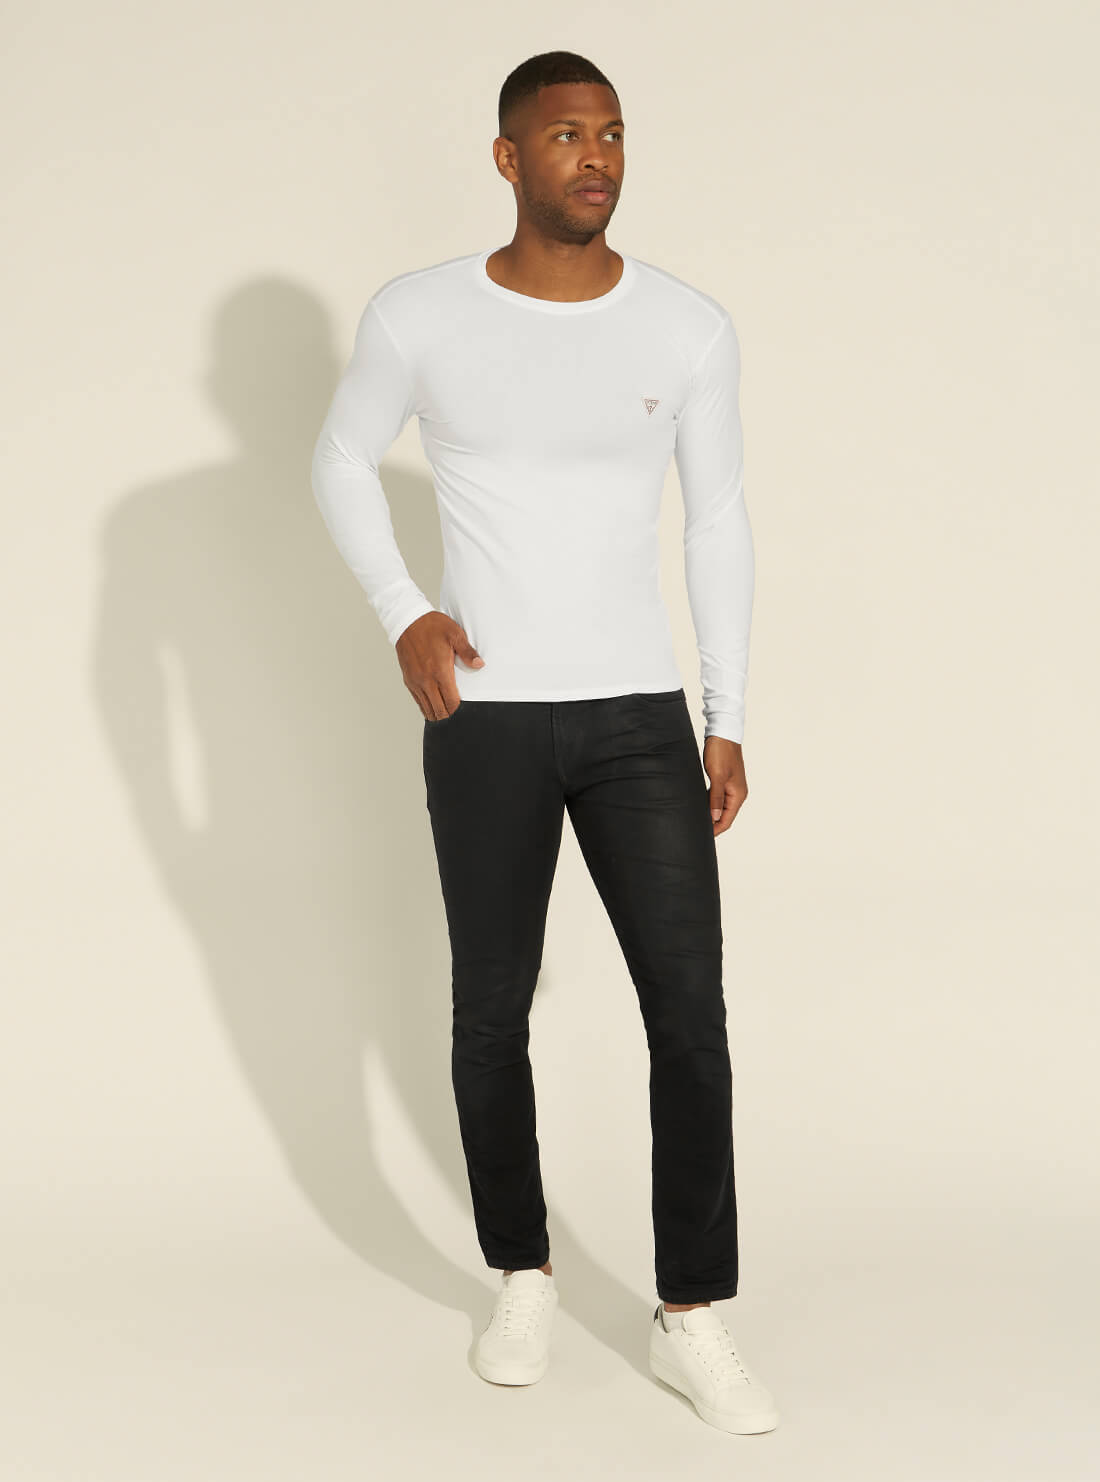 GUESS Mens White Super Slim Long Sleeve T-Shirt M1RI28J1311 Full View